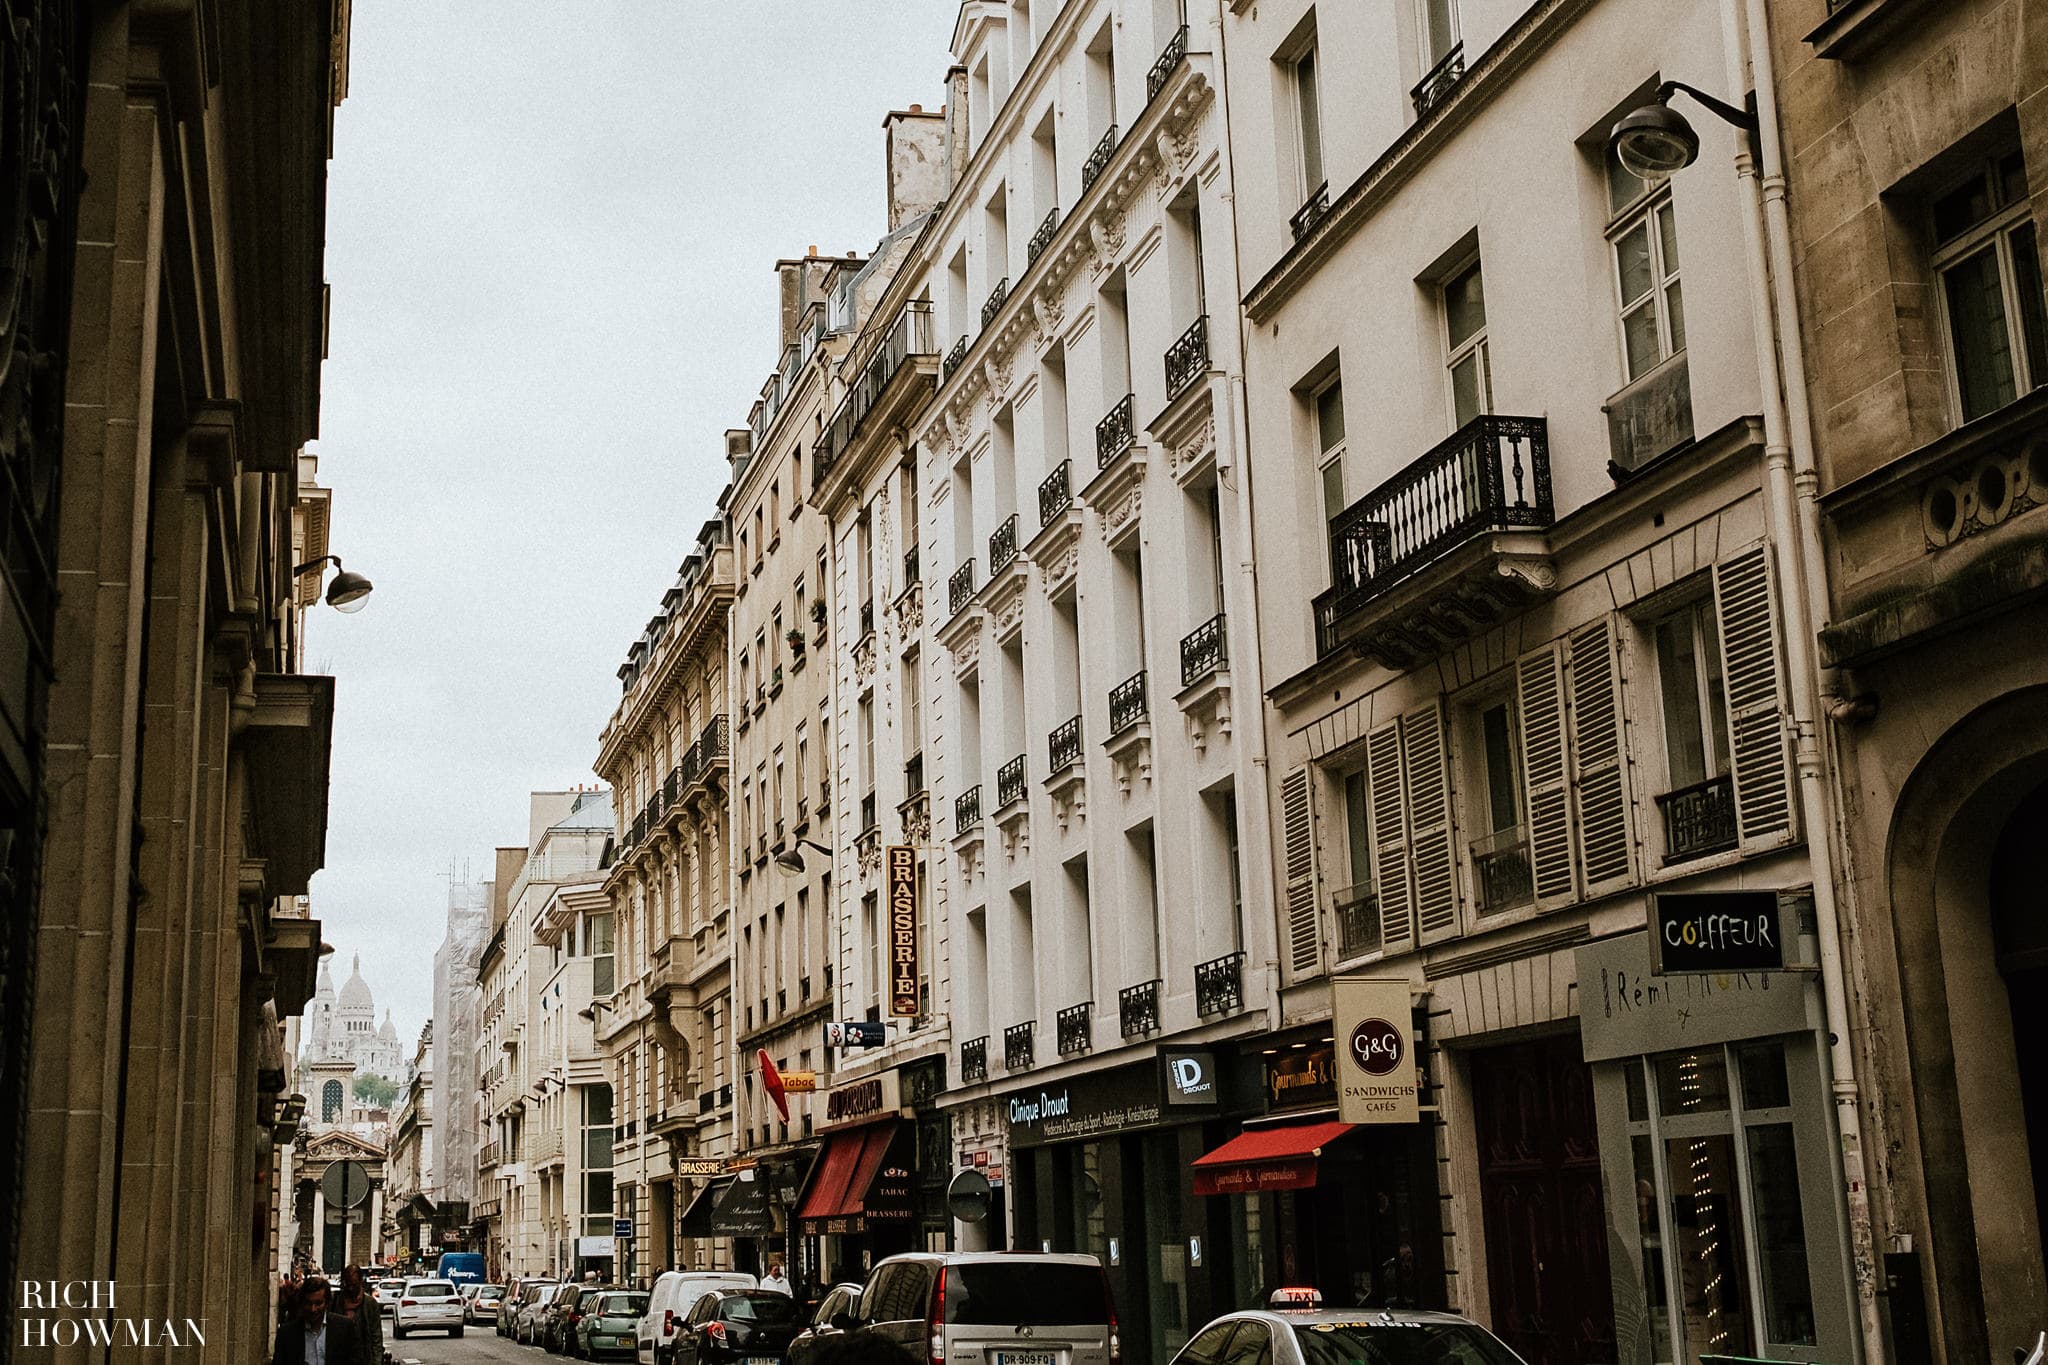 Walking through the streets of Paris